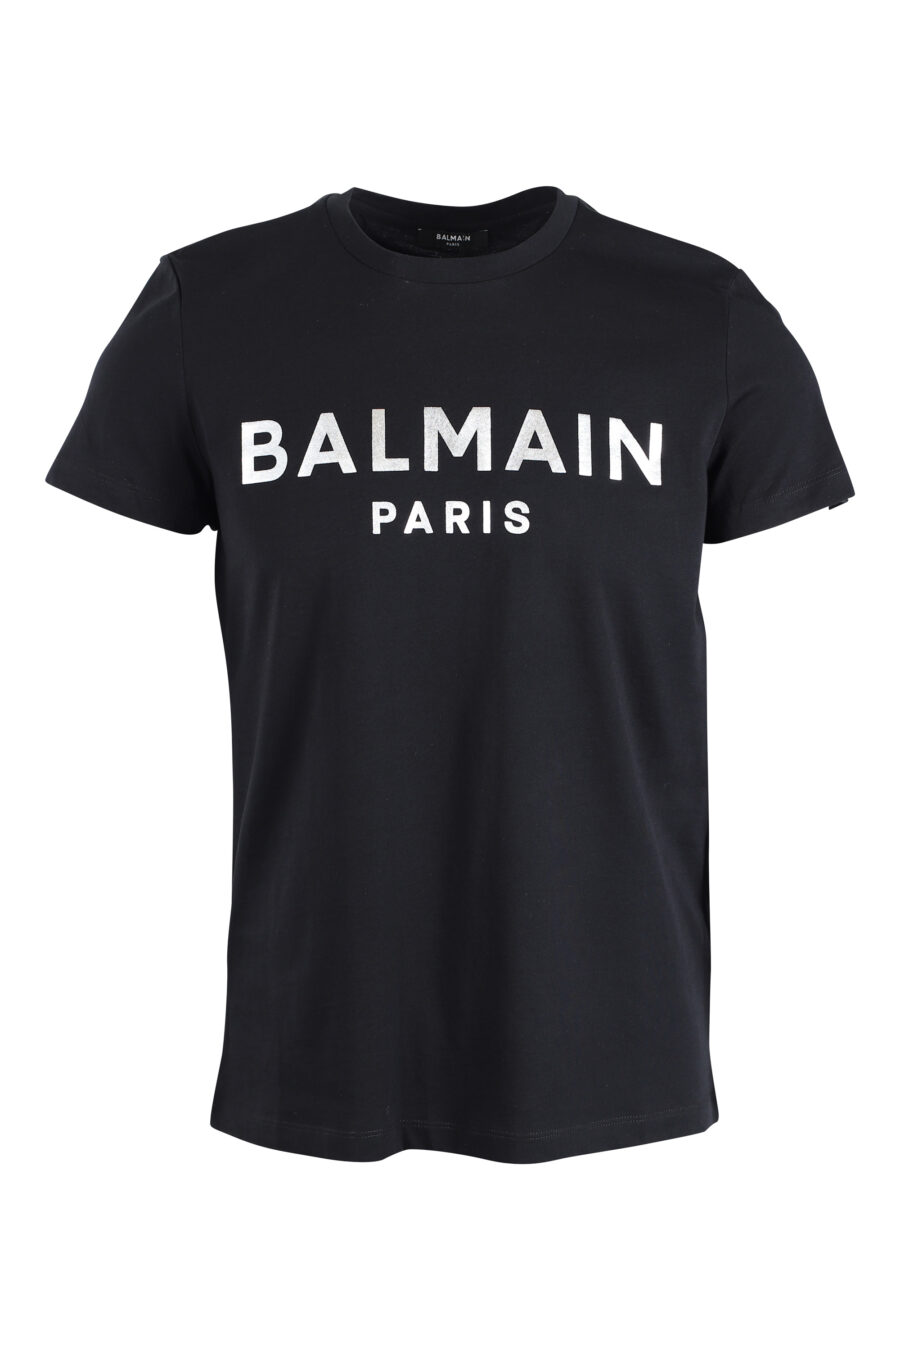 Black T-shirt with silver maxilogo "paris" - IMG 2589